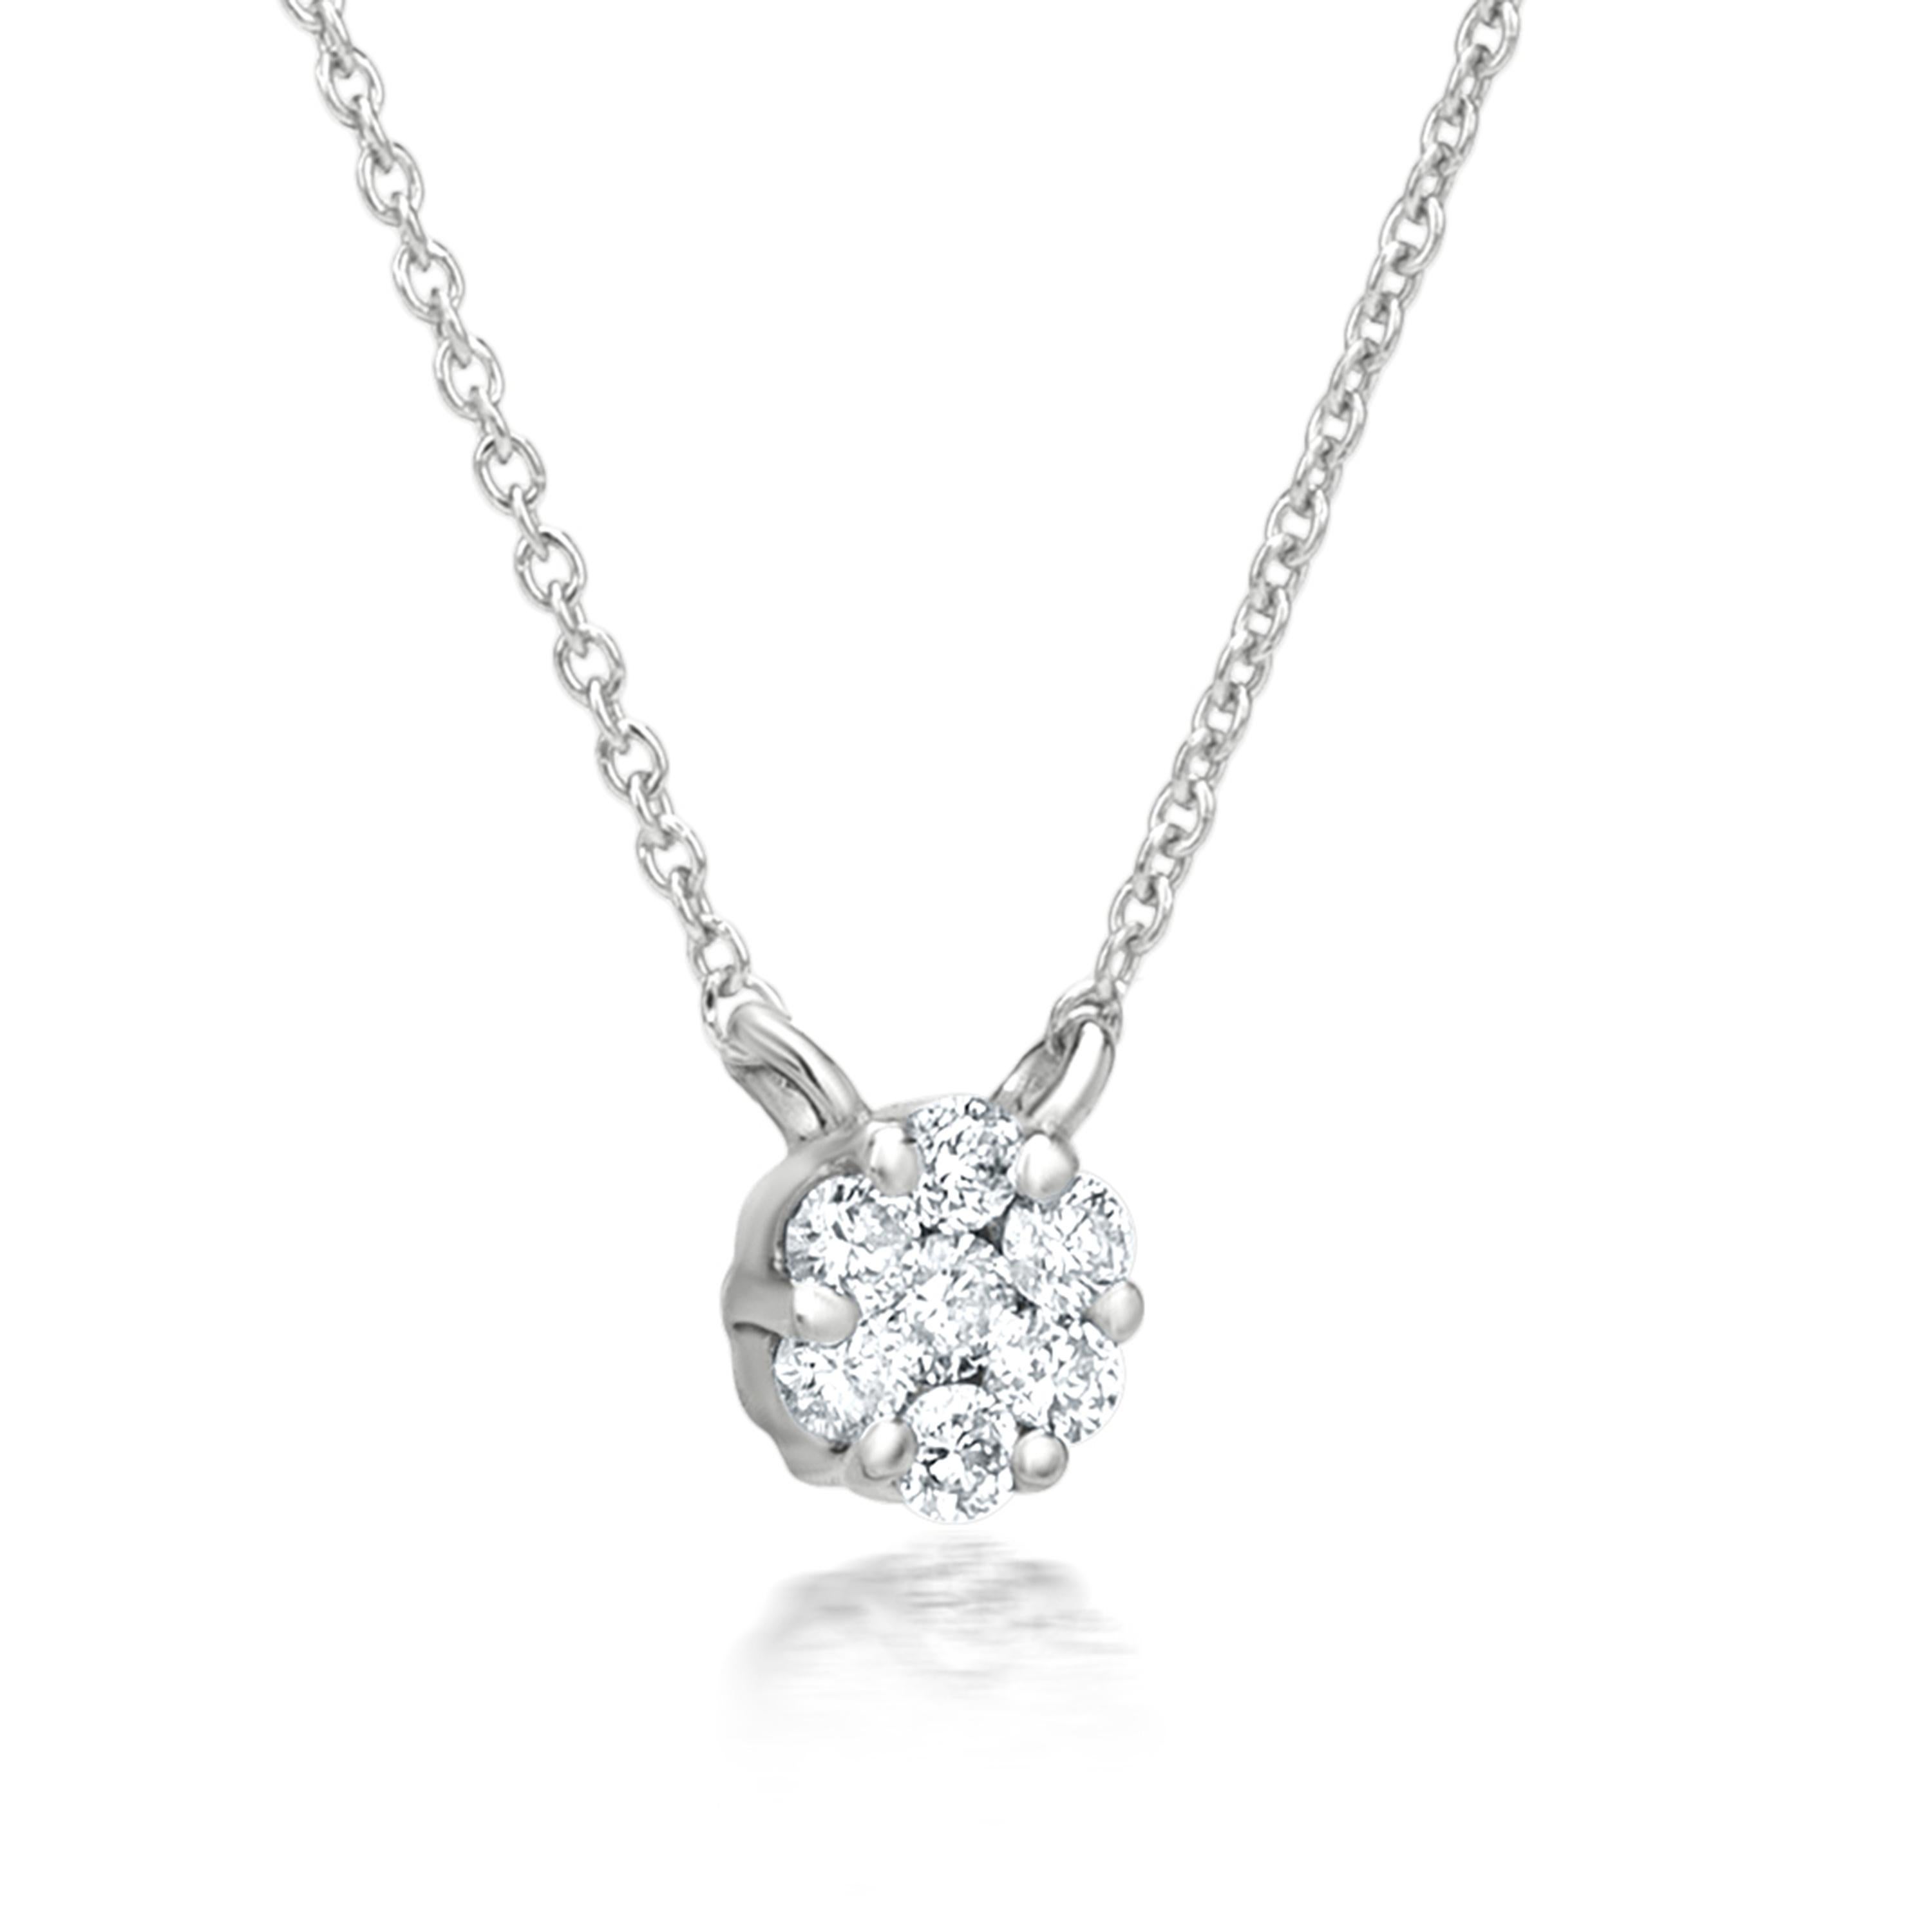 Contemporary Luxle Cluster Diamond Pendant Necklace in 18K White Gold